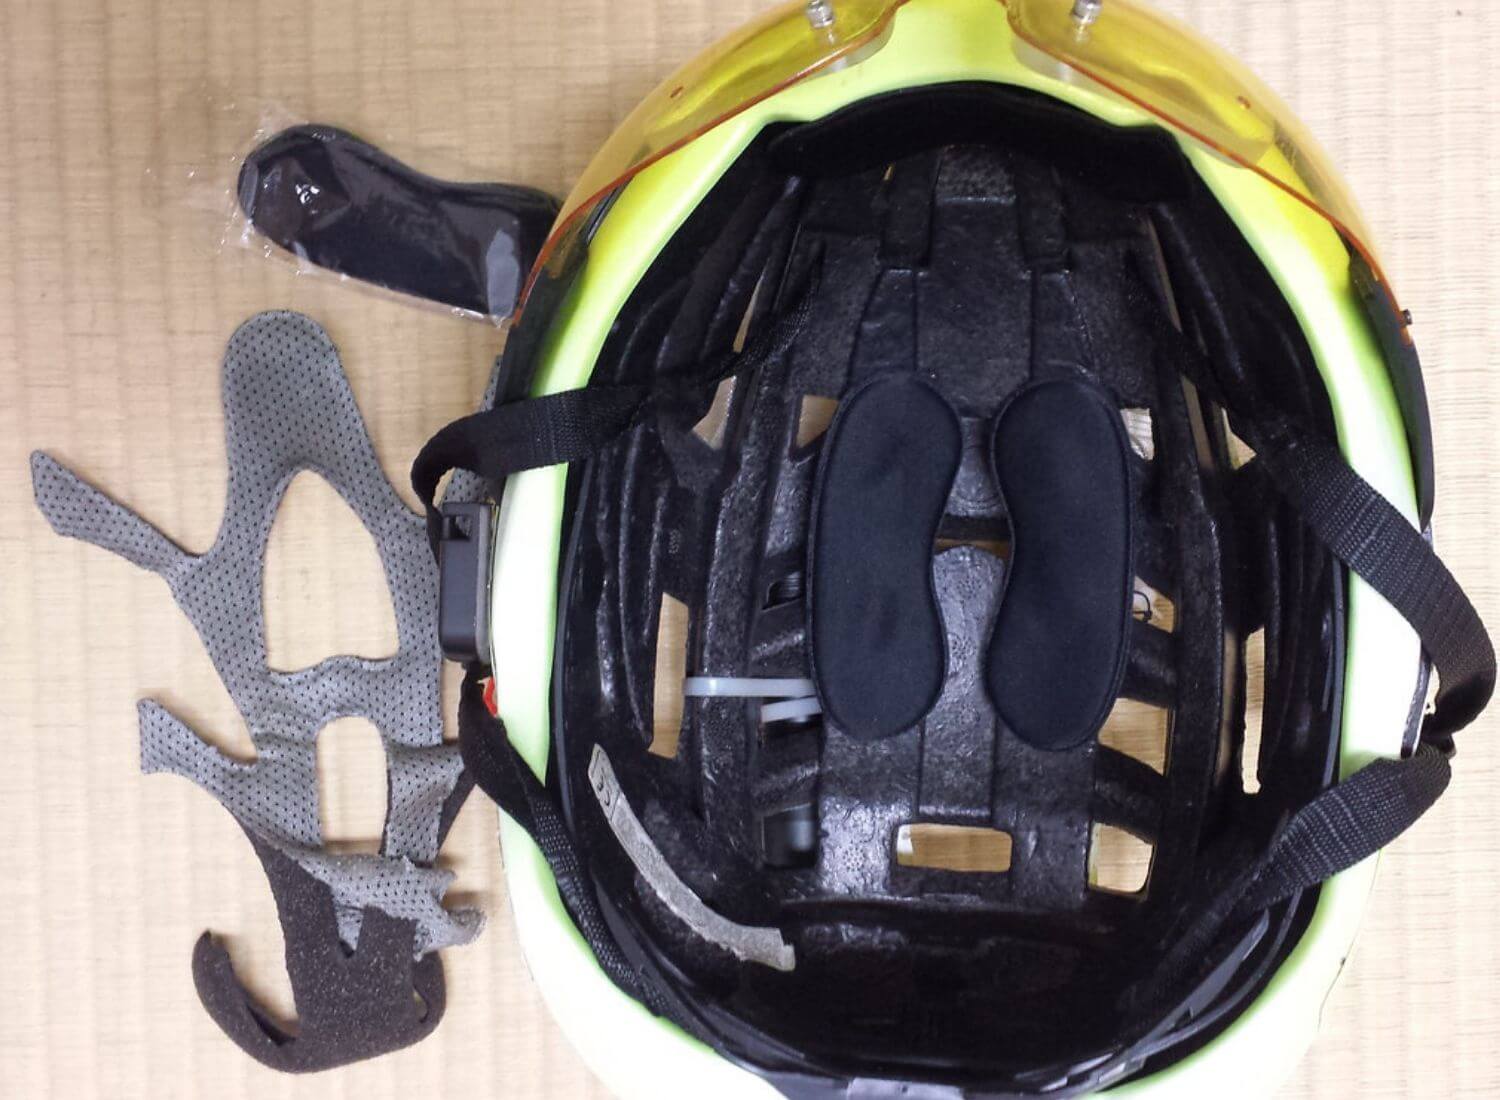 Does Helmet Padding Affect Helmet Safety?